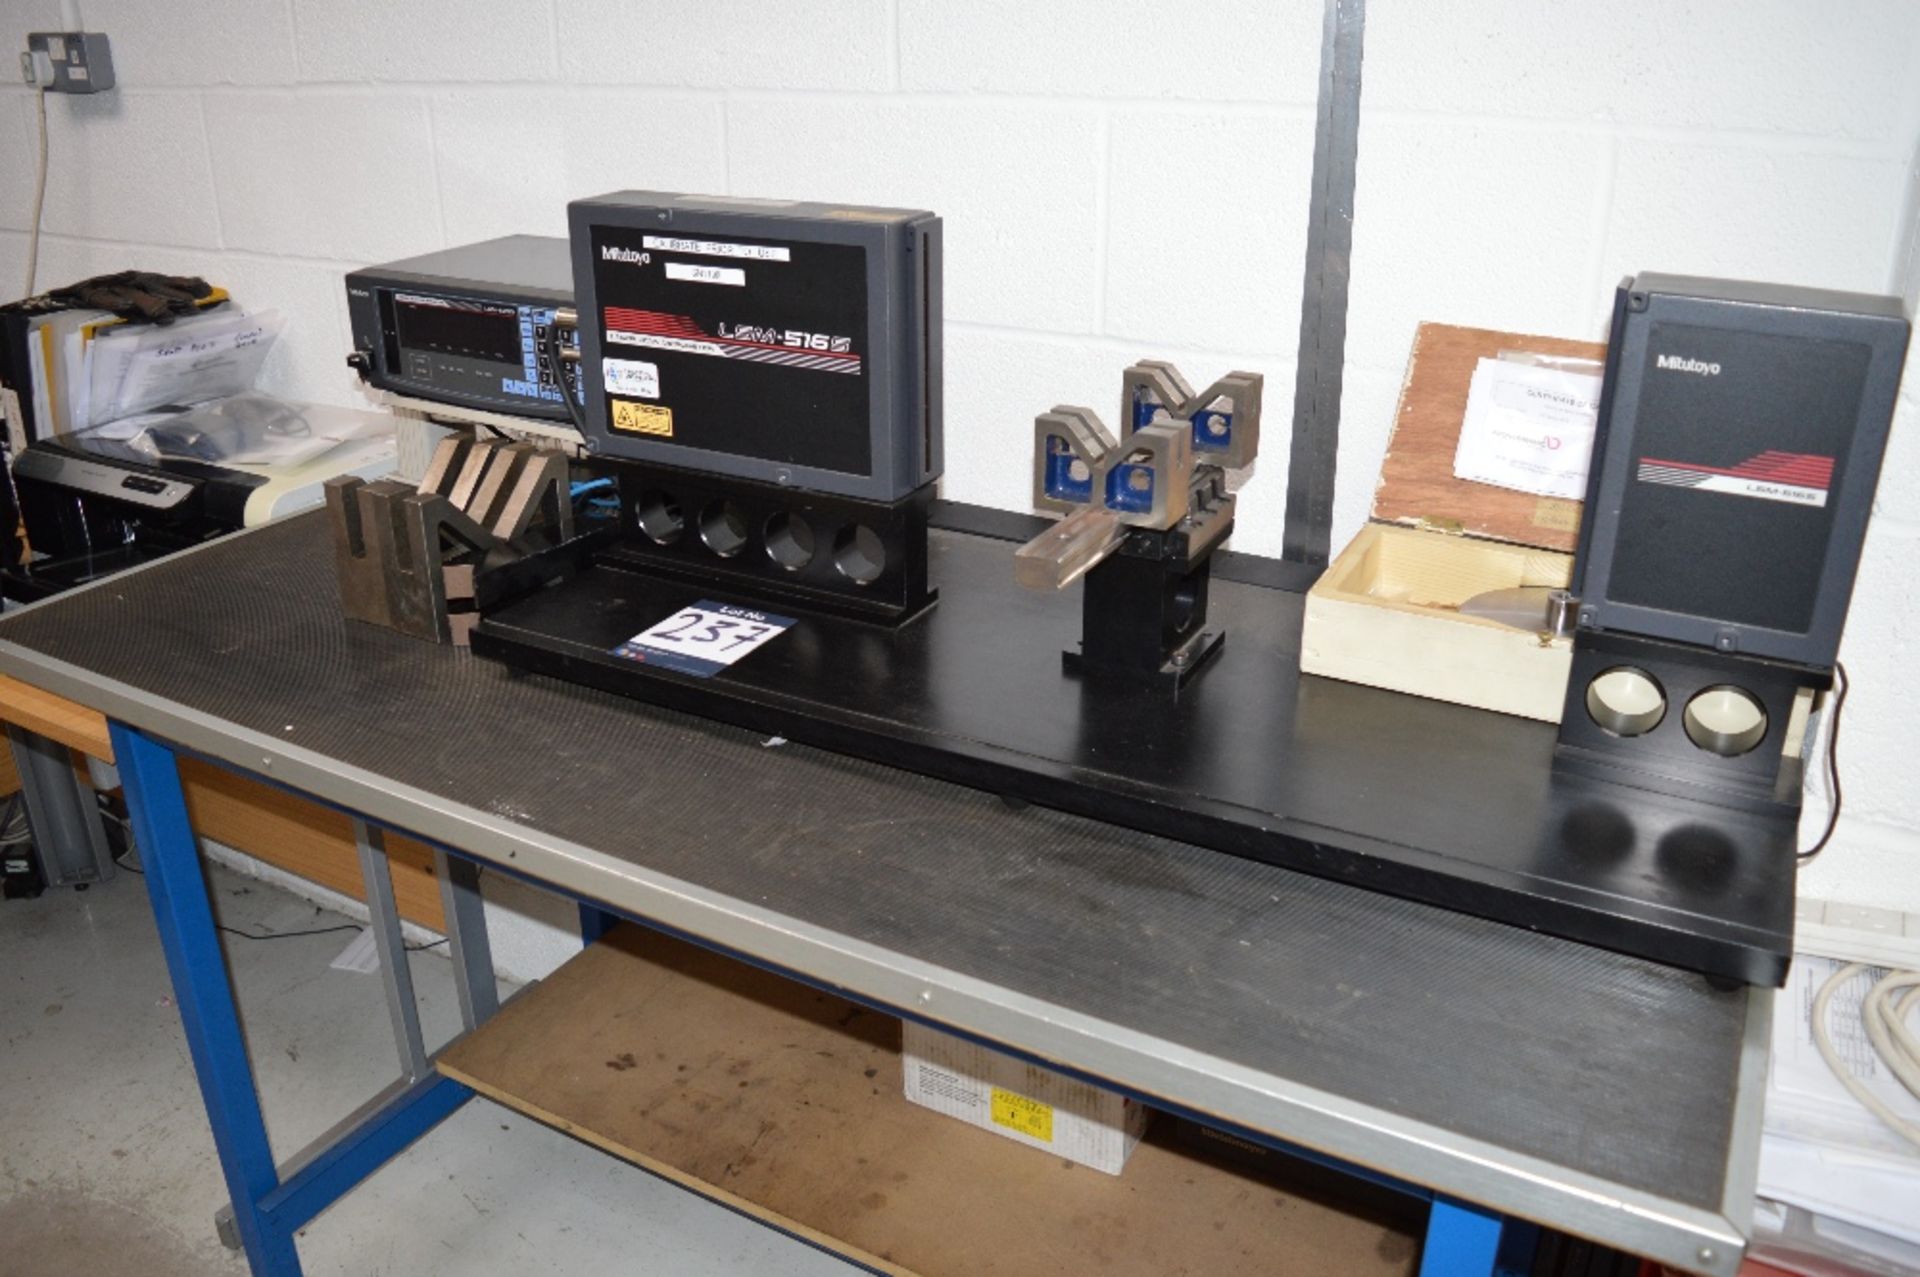 Mitutoyo LSM-516 S laser scan micrometer
Serial no